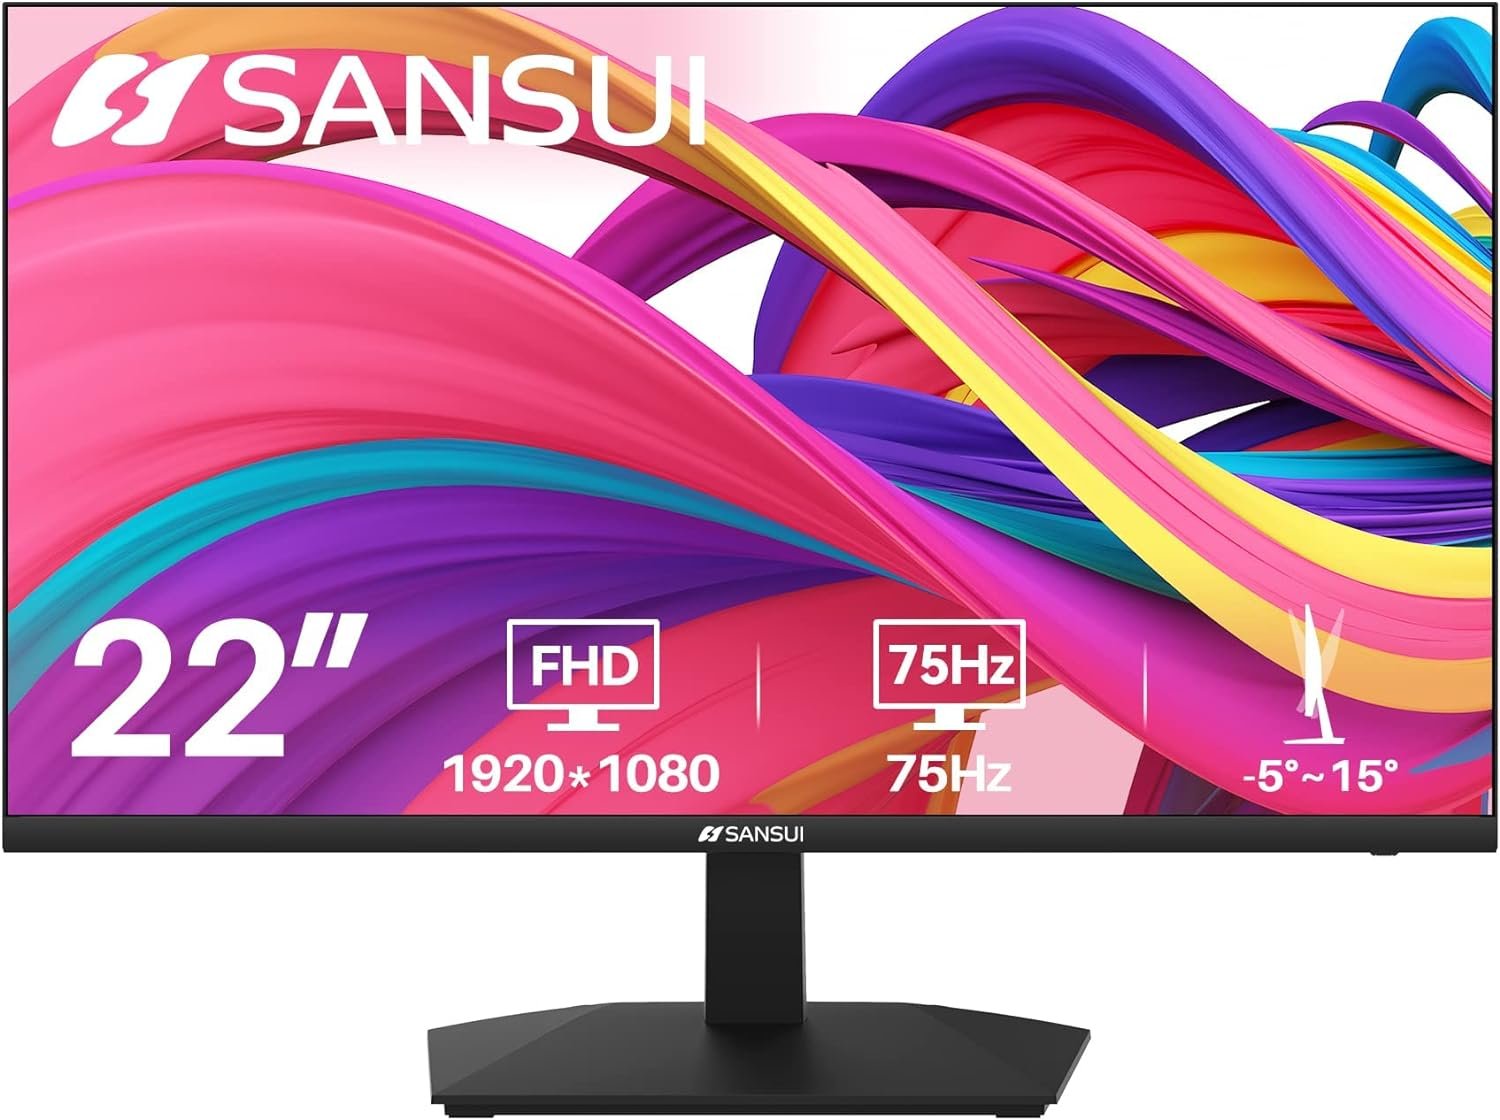 SANSUI Monitor 22 inch 1080p FHD 75Hz Computer Monitor